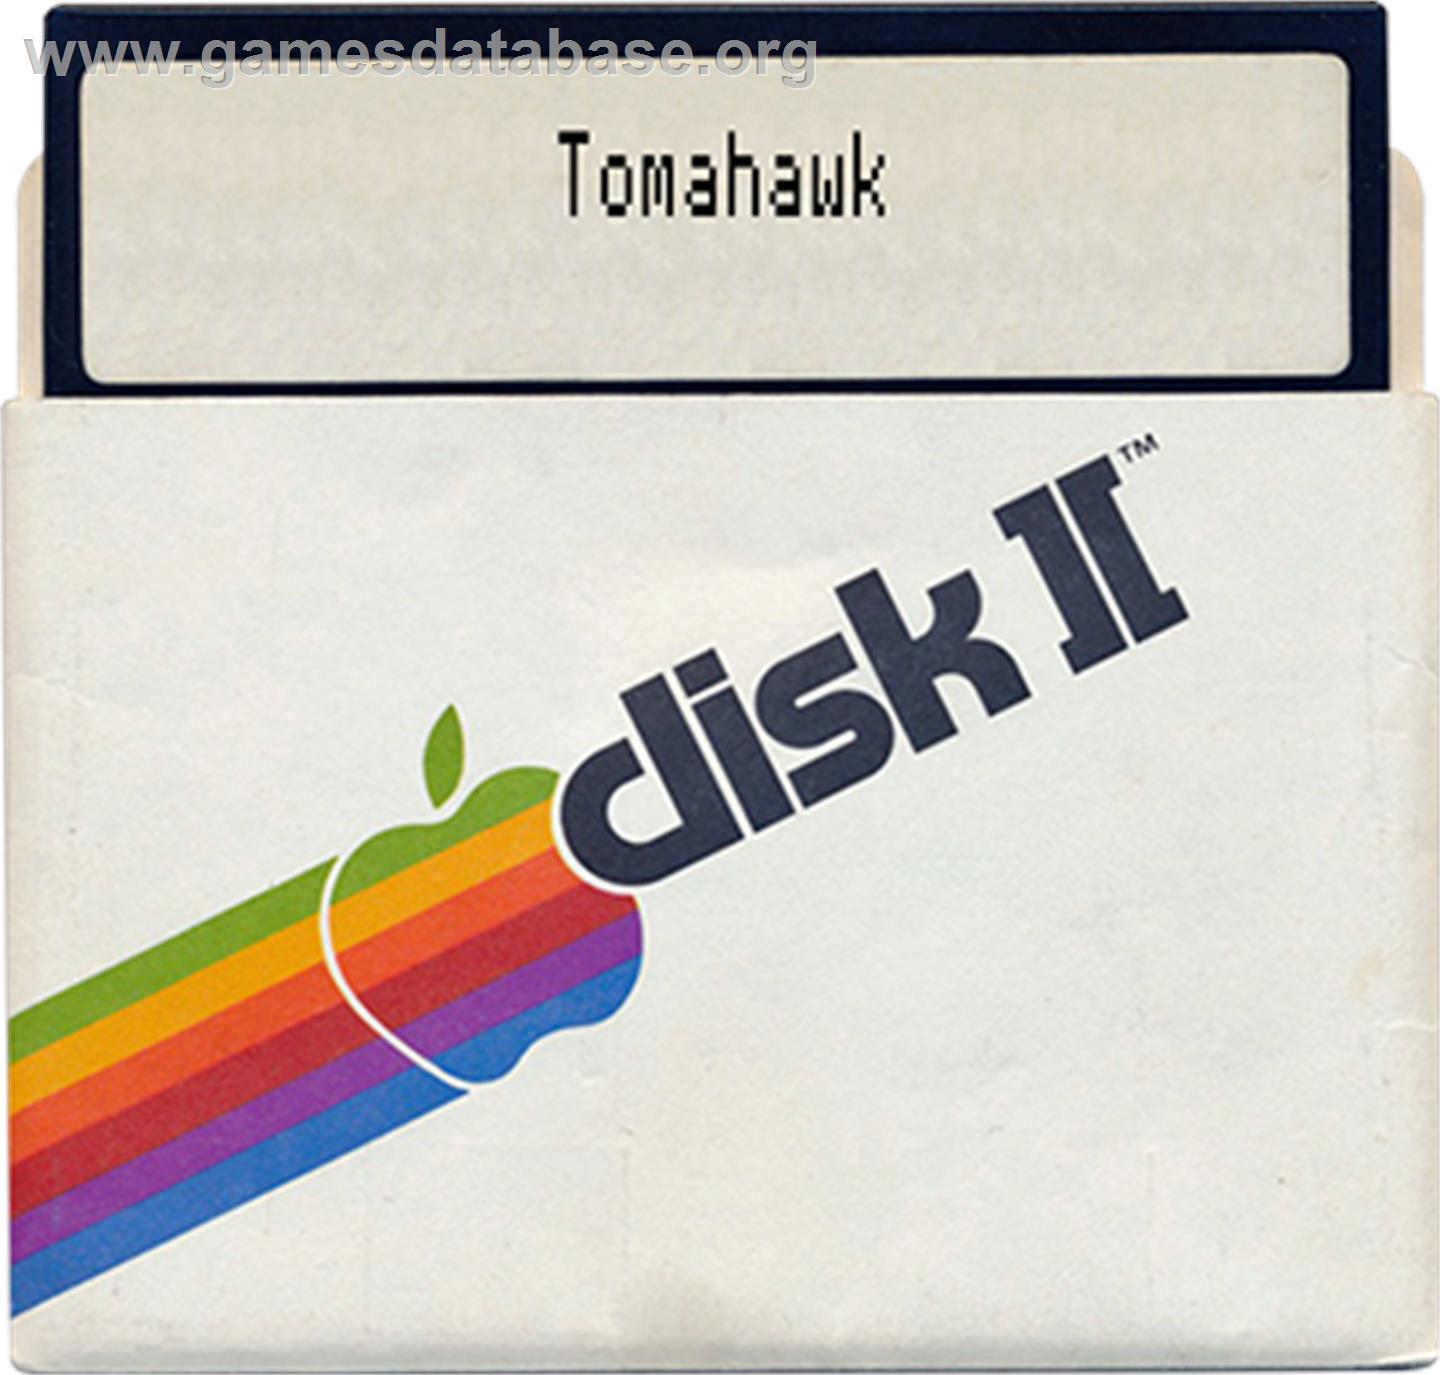 Tomahawk - Apple II - Artwork - Disc